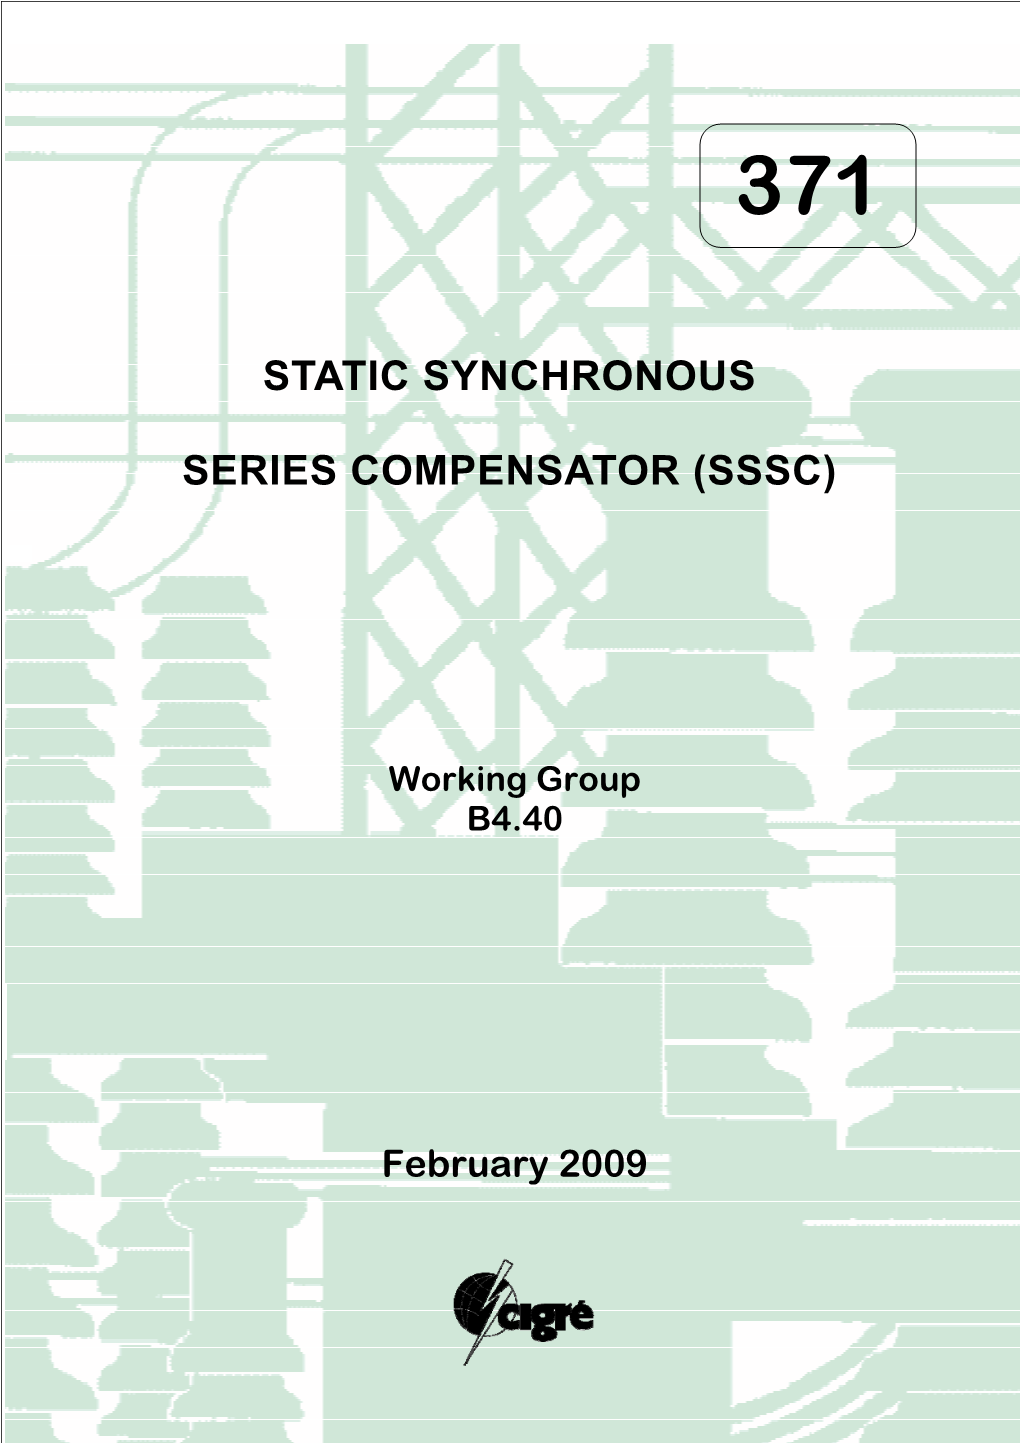 Static Synchronous Series Compensator (SSSC)